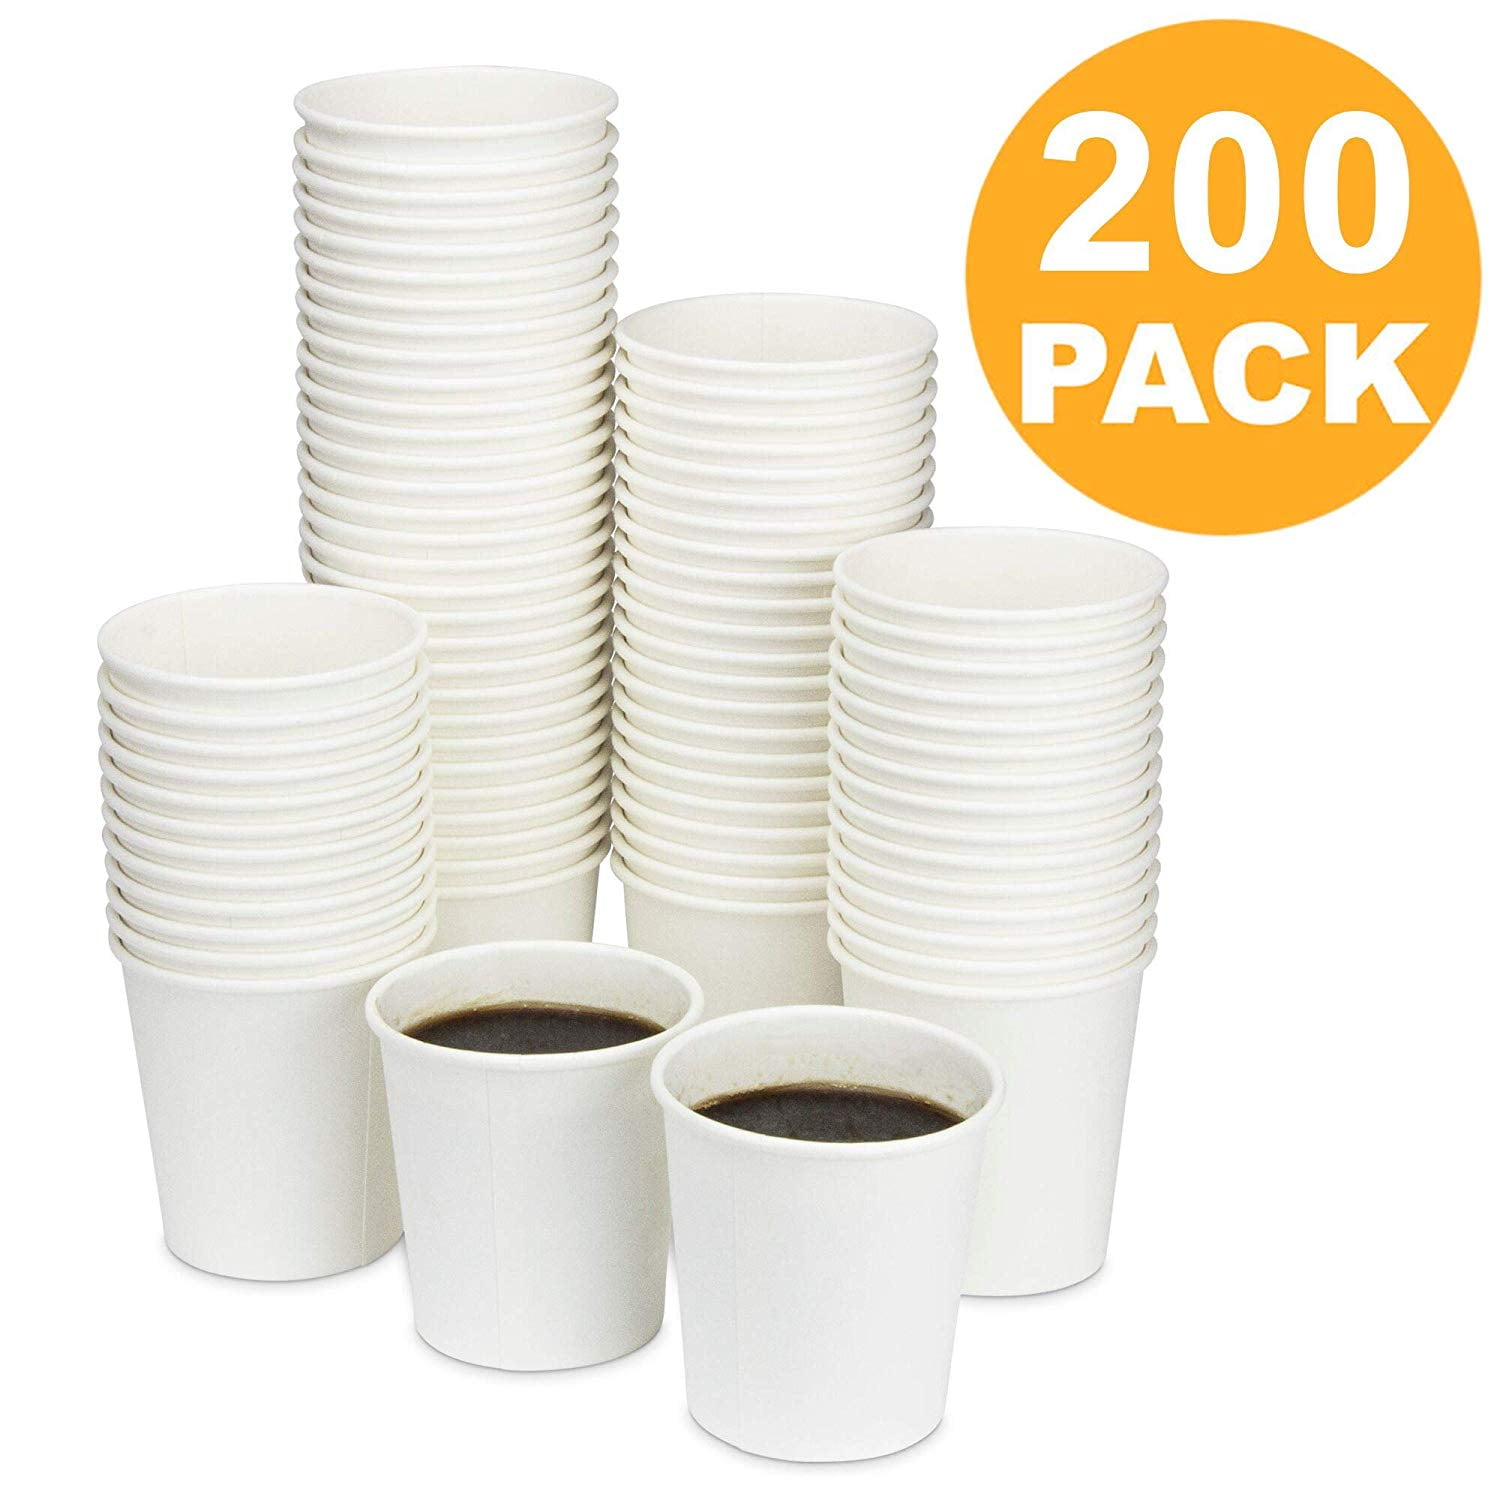 Bicchiere Carta Caffe espresso con manico 4oz-90ml x 200 Pz per bevande calde paper cup with handle